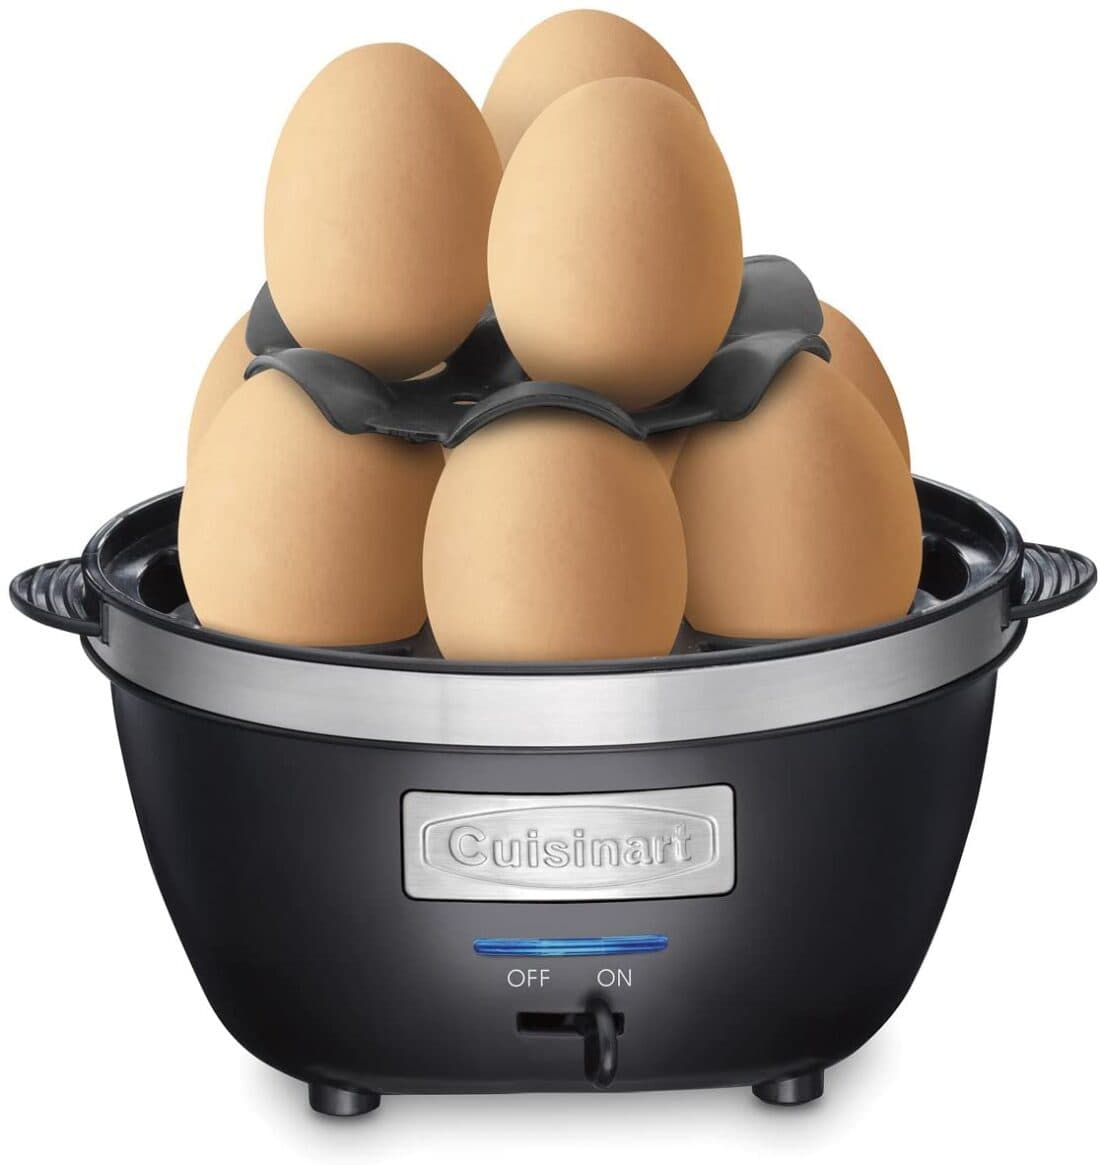 eggs in an egg cooker